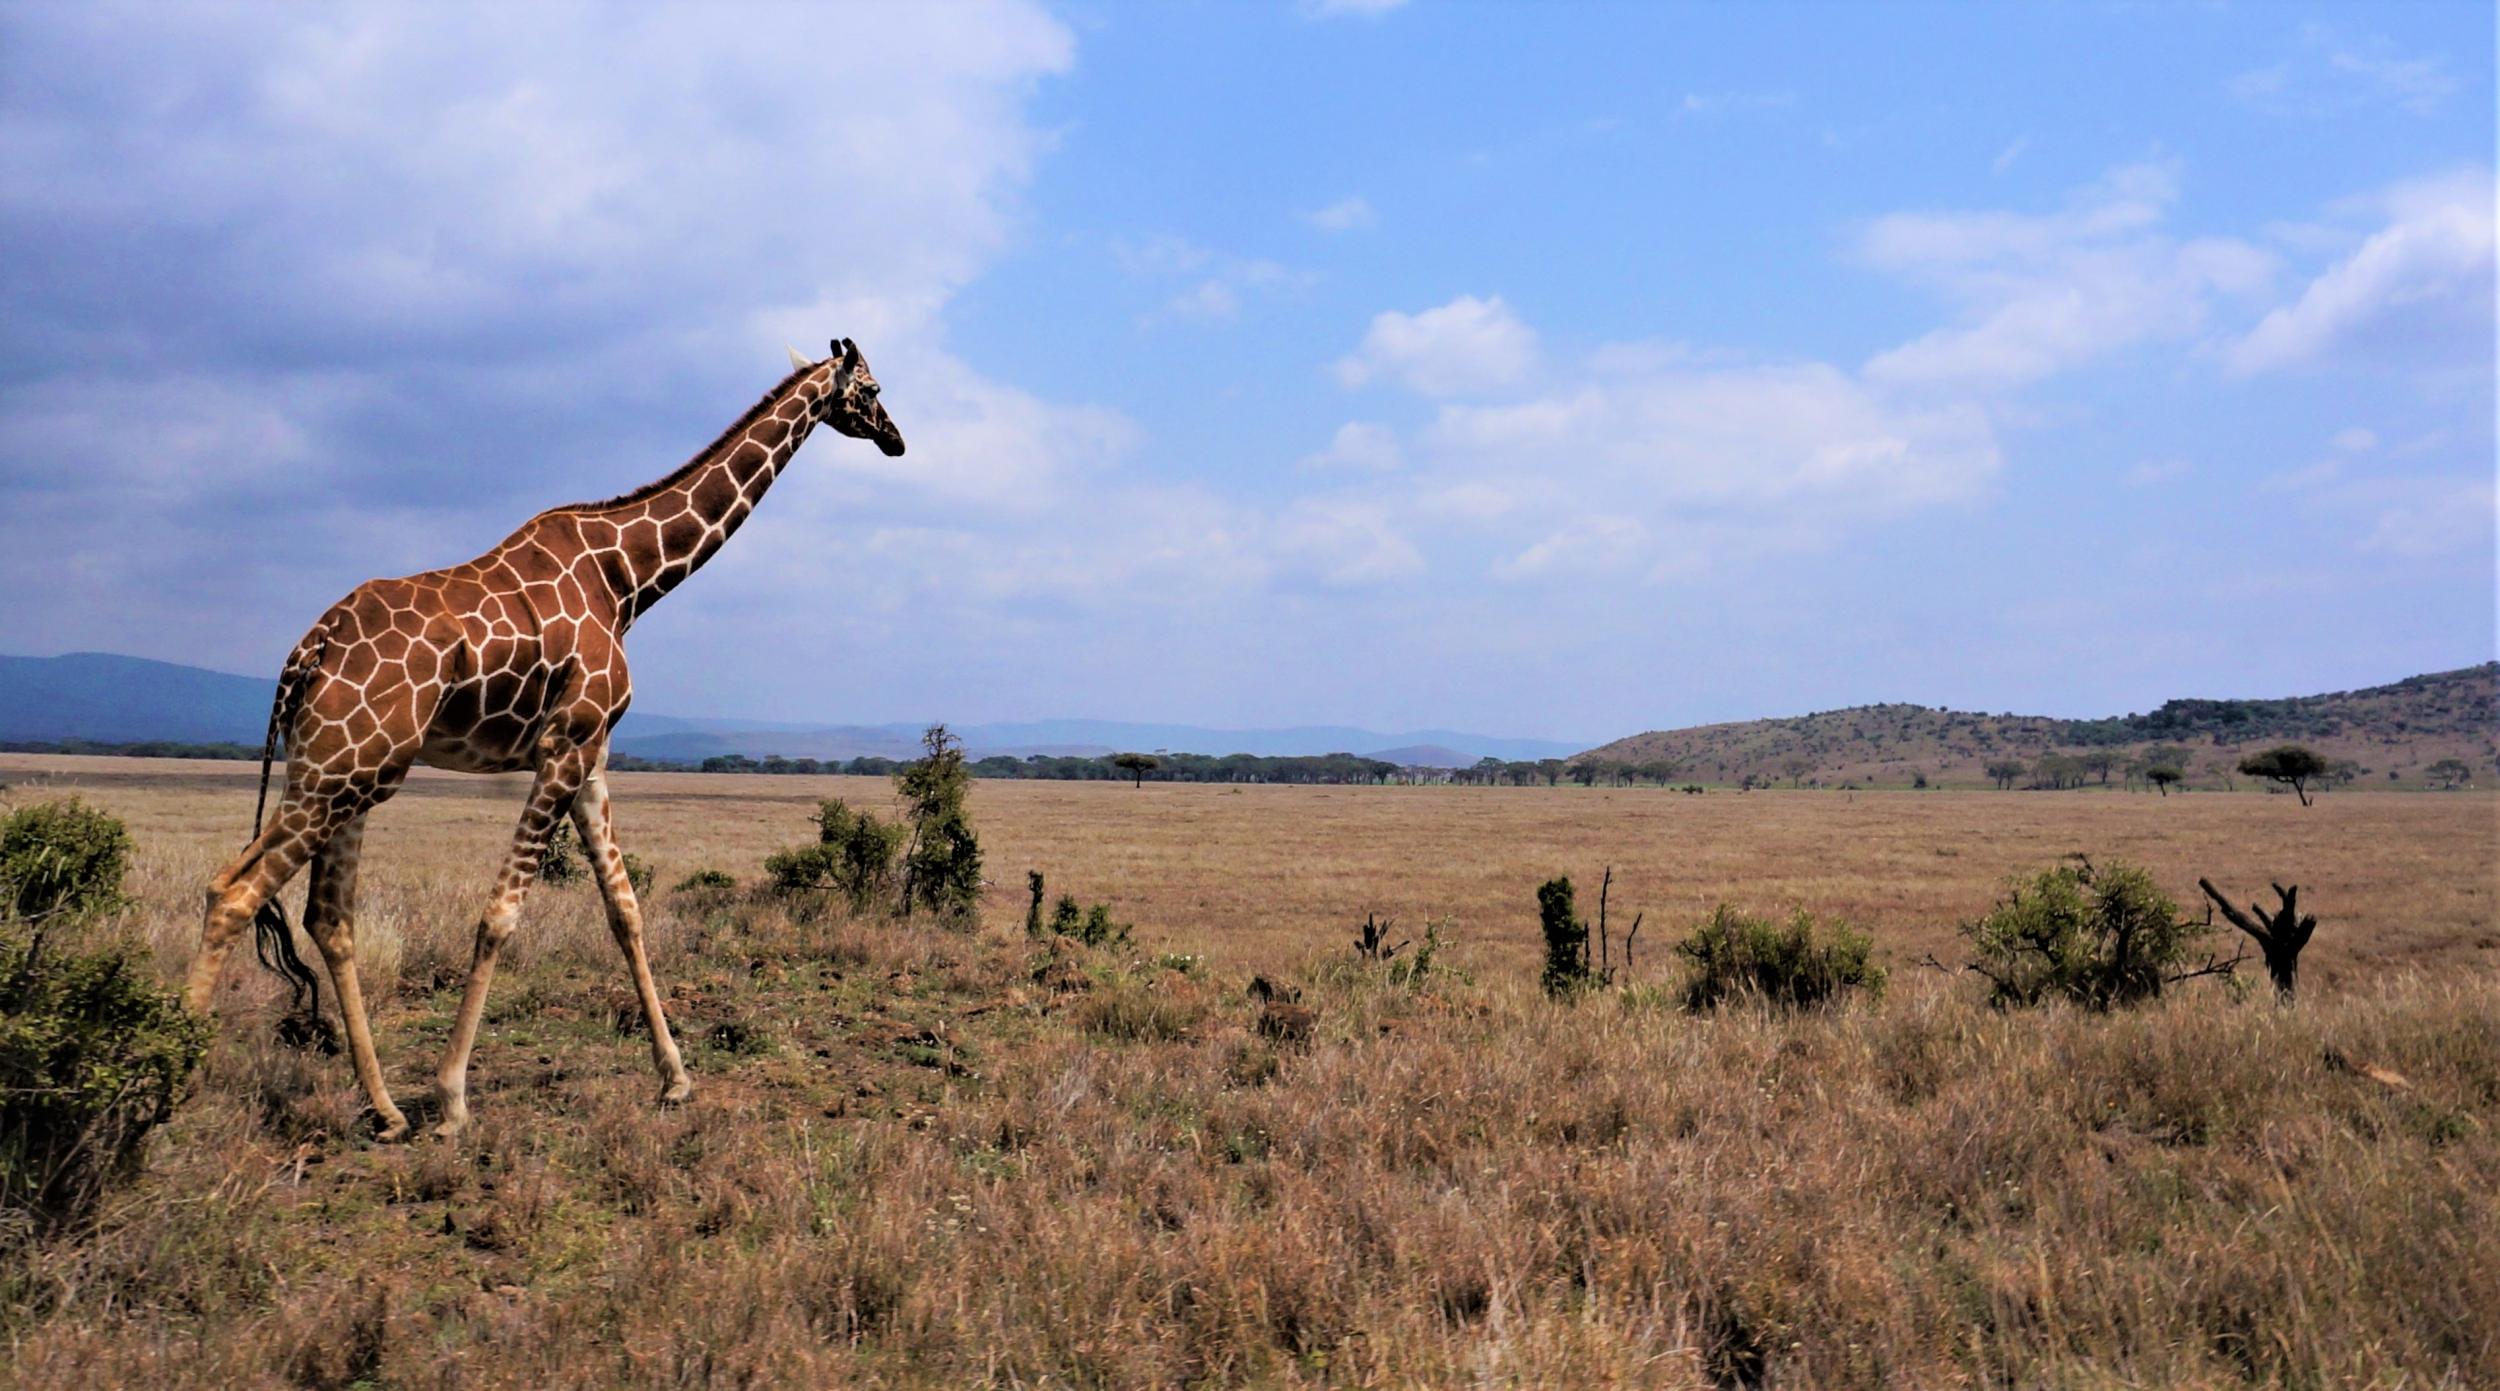 A giraffe looks onto the marathon route through the Lewa conservacy